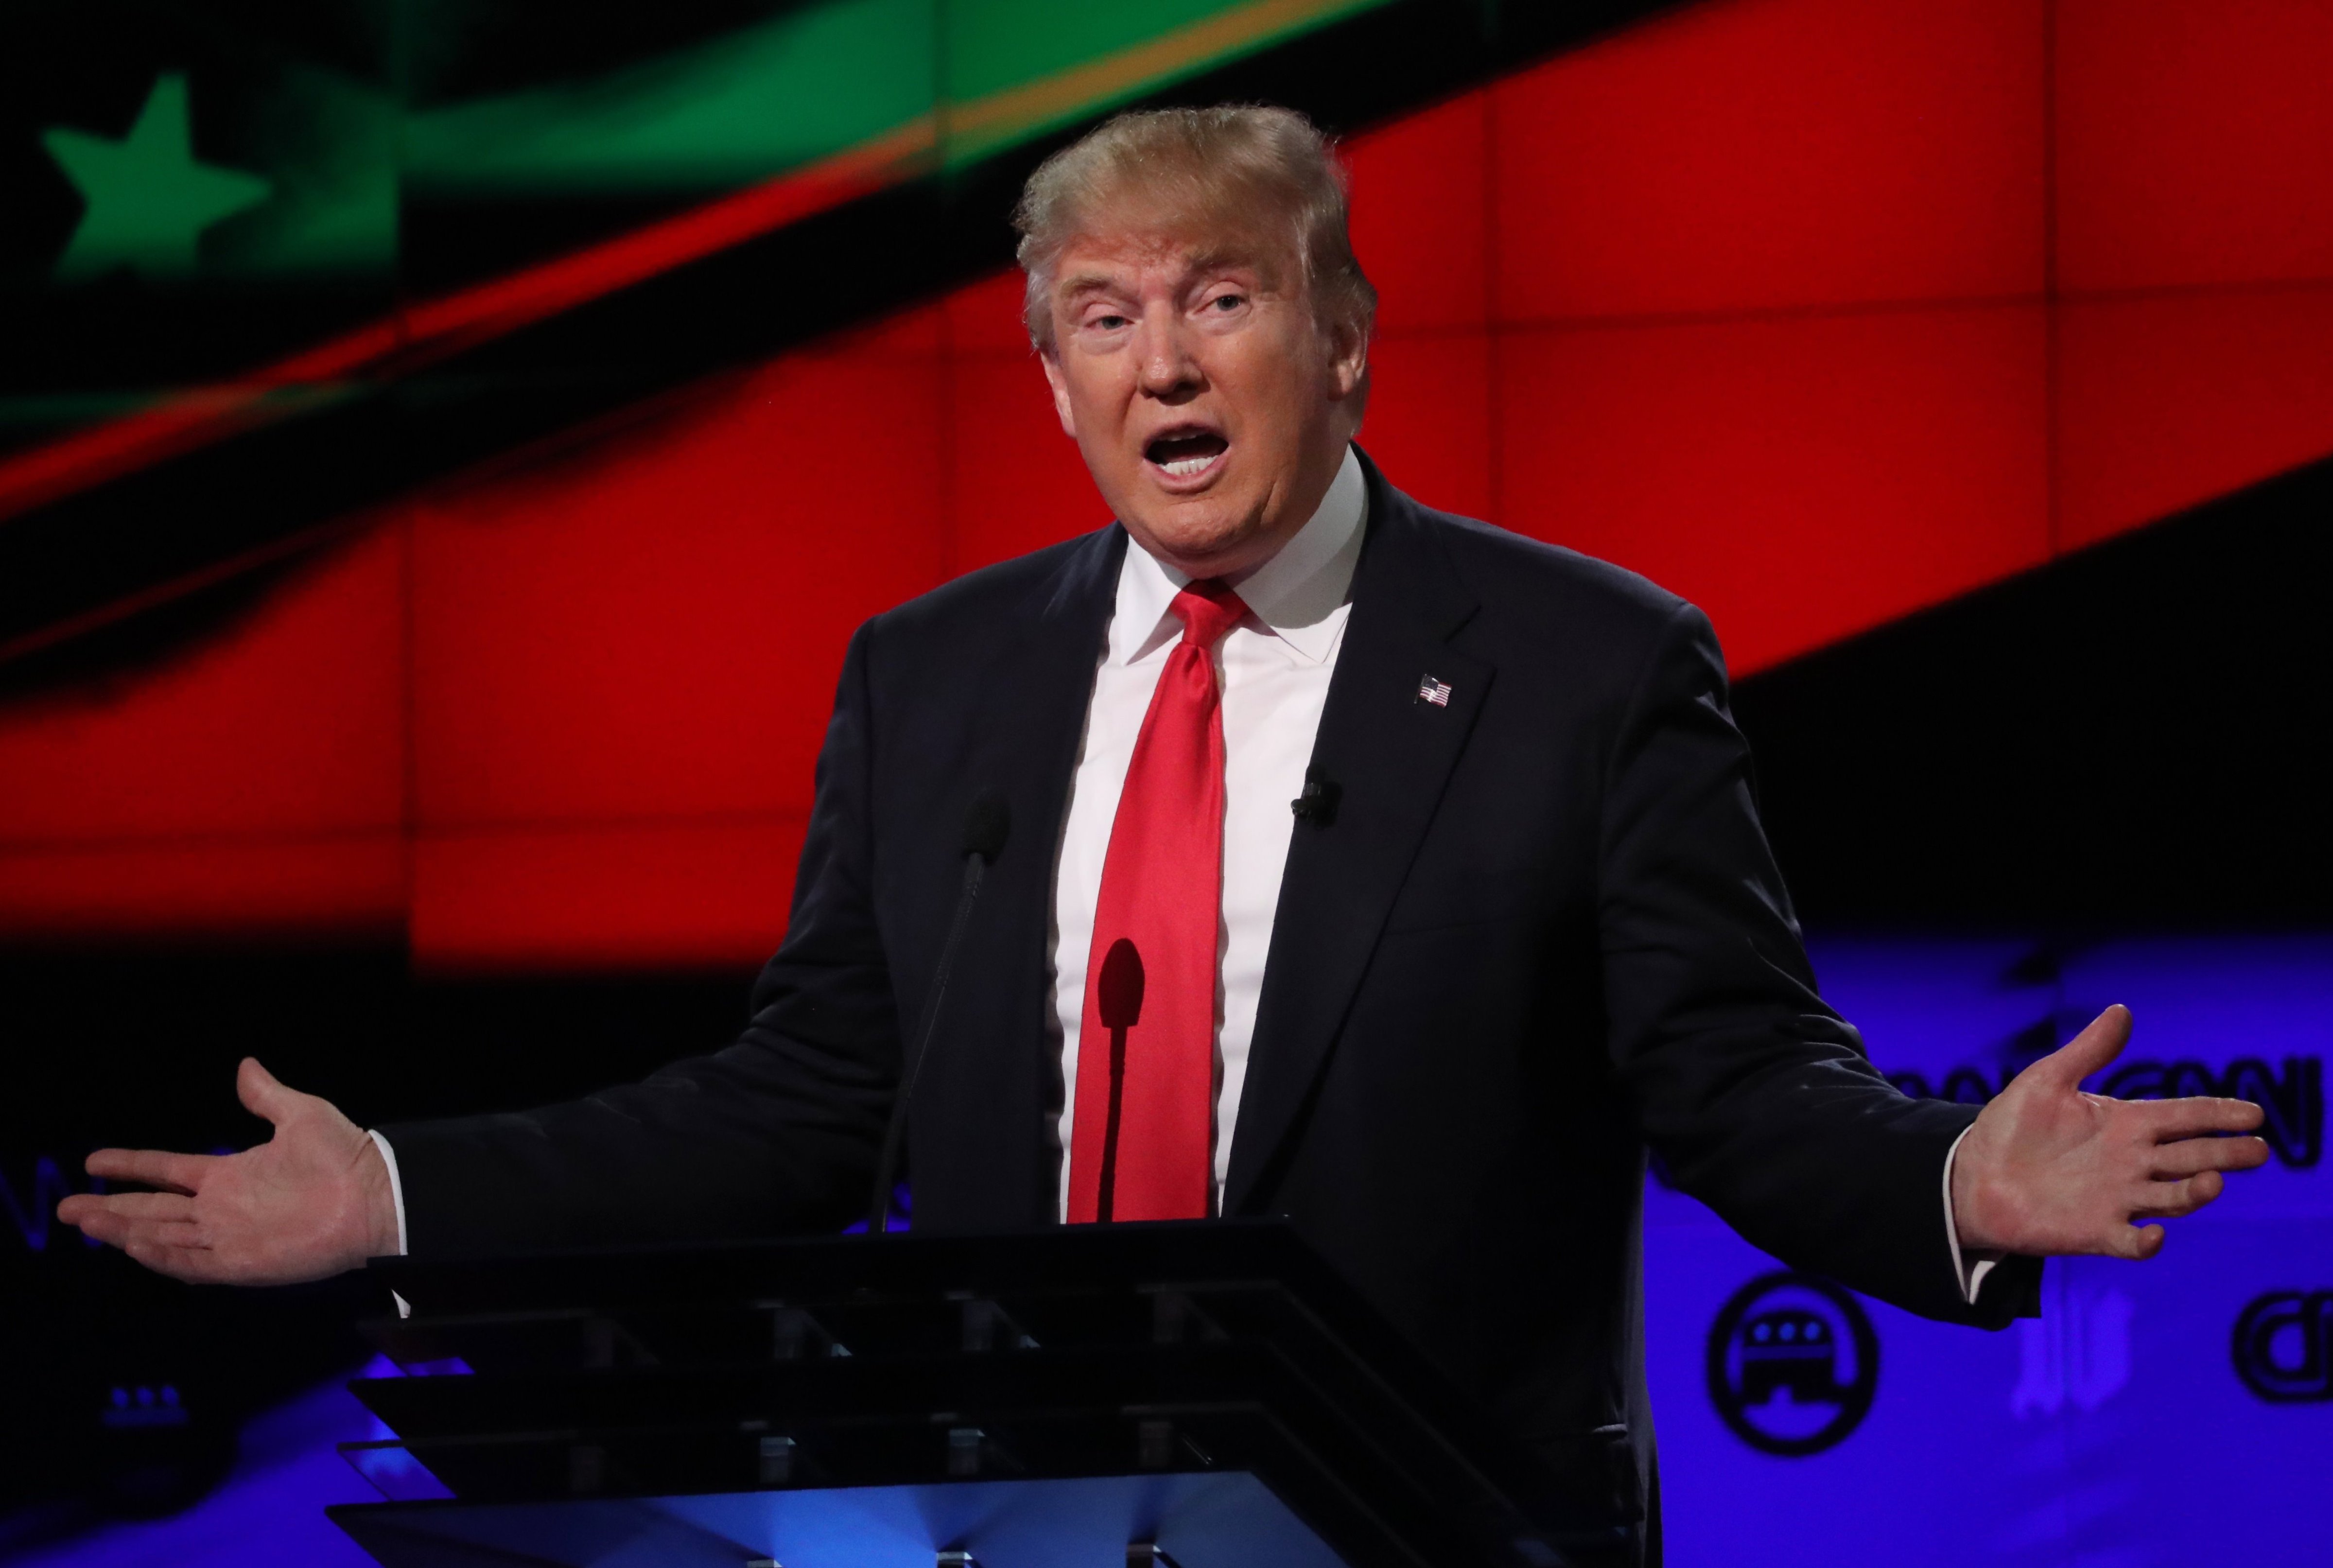 Republican U.S. presidential candidate Donald Trump speaks during the Republican candidates debate in Miami